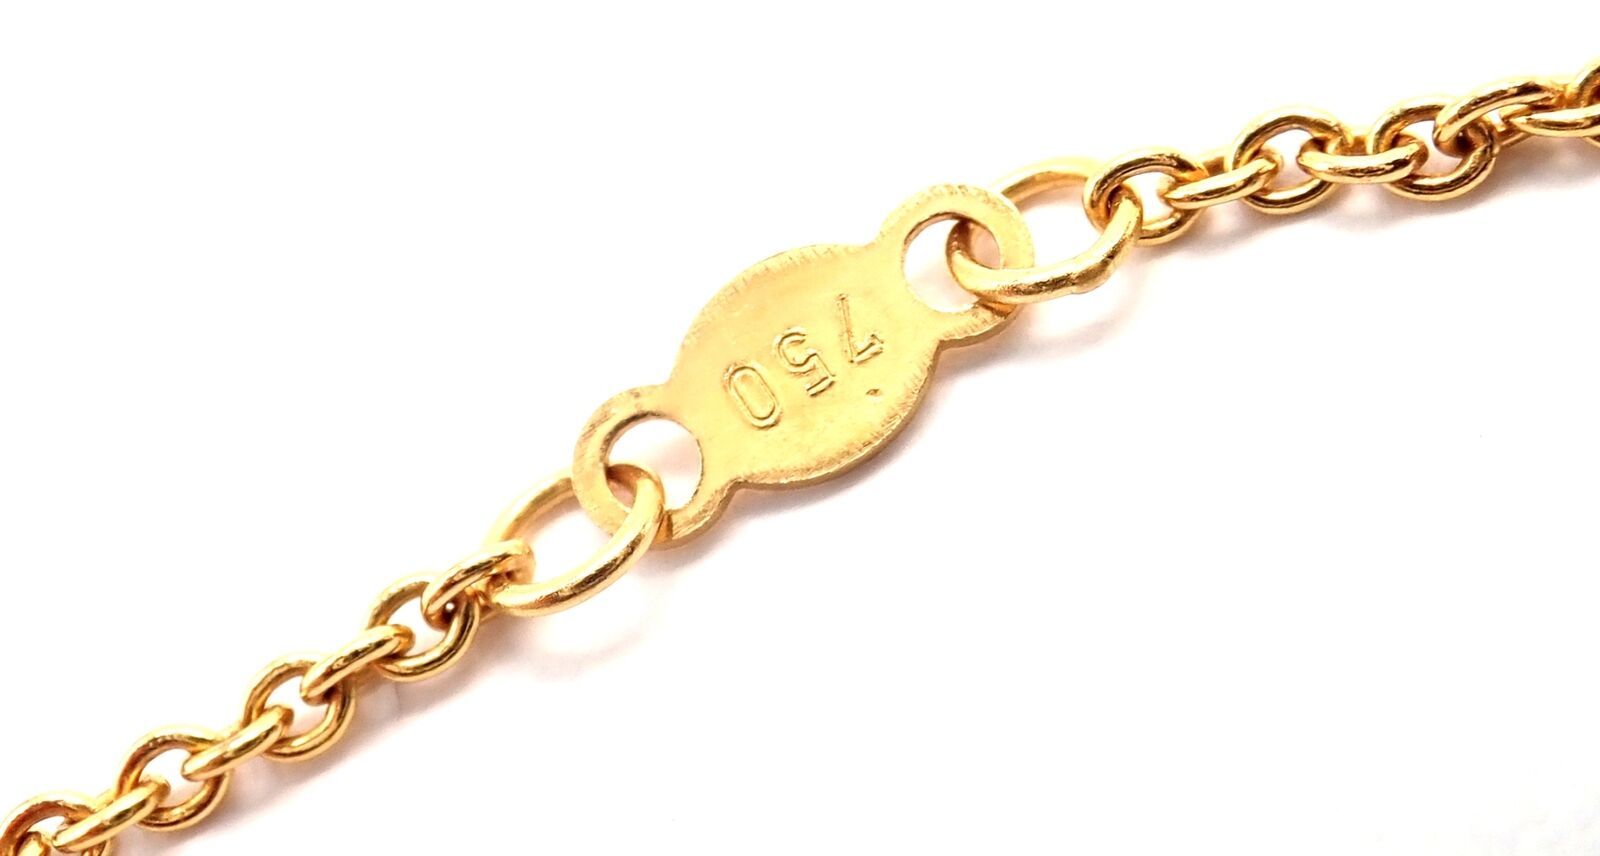 Georg Jensen Jewelry & Watches:Fine Jewelry:Necklaces & Pendants Authentic! Georg Jensen 18k Yellow Gold Star Of David Pendant Necklace